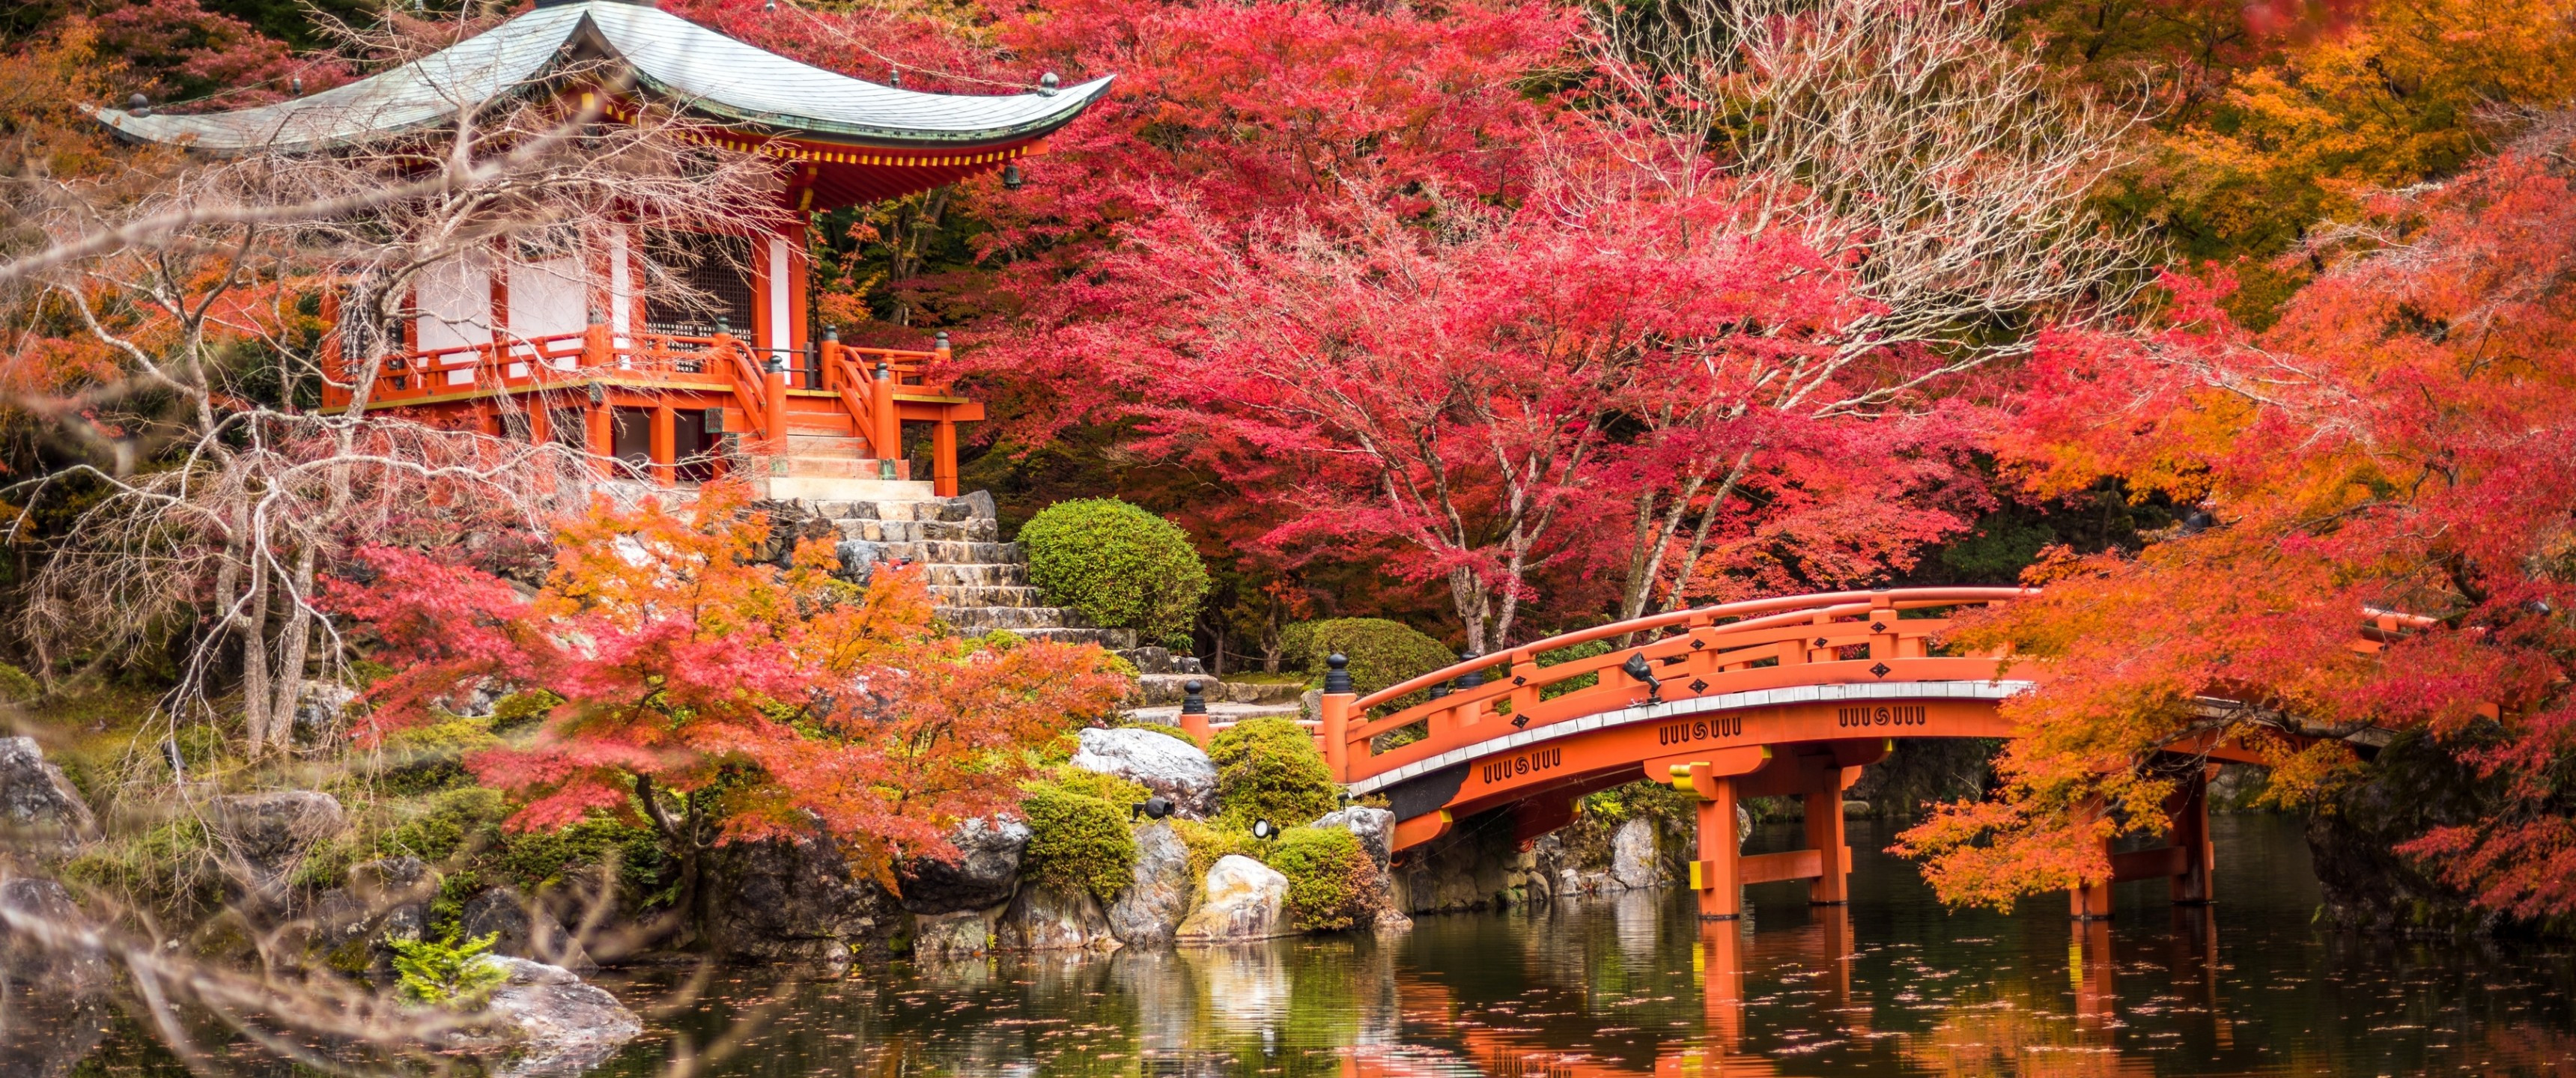 Download 3440x1440 Japan, Shrine, Pagoda, Bridge, Stream, Foliage, Park, Autumn Wallpaper